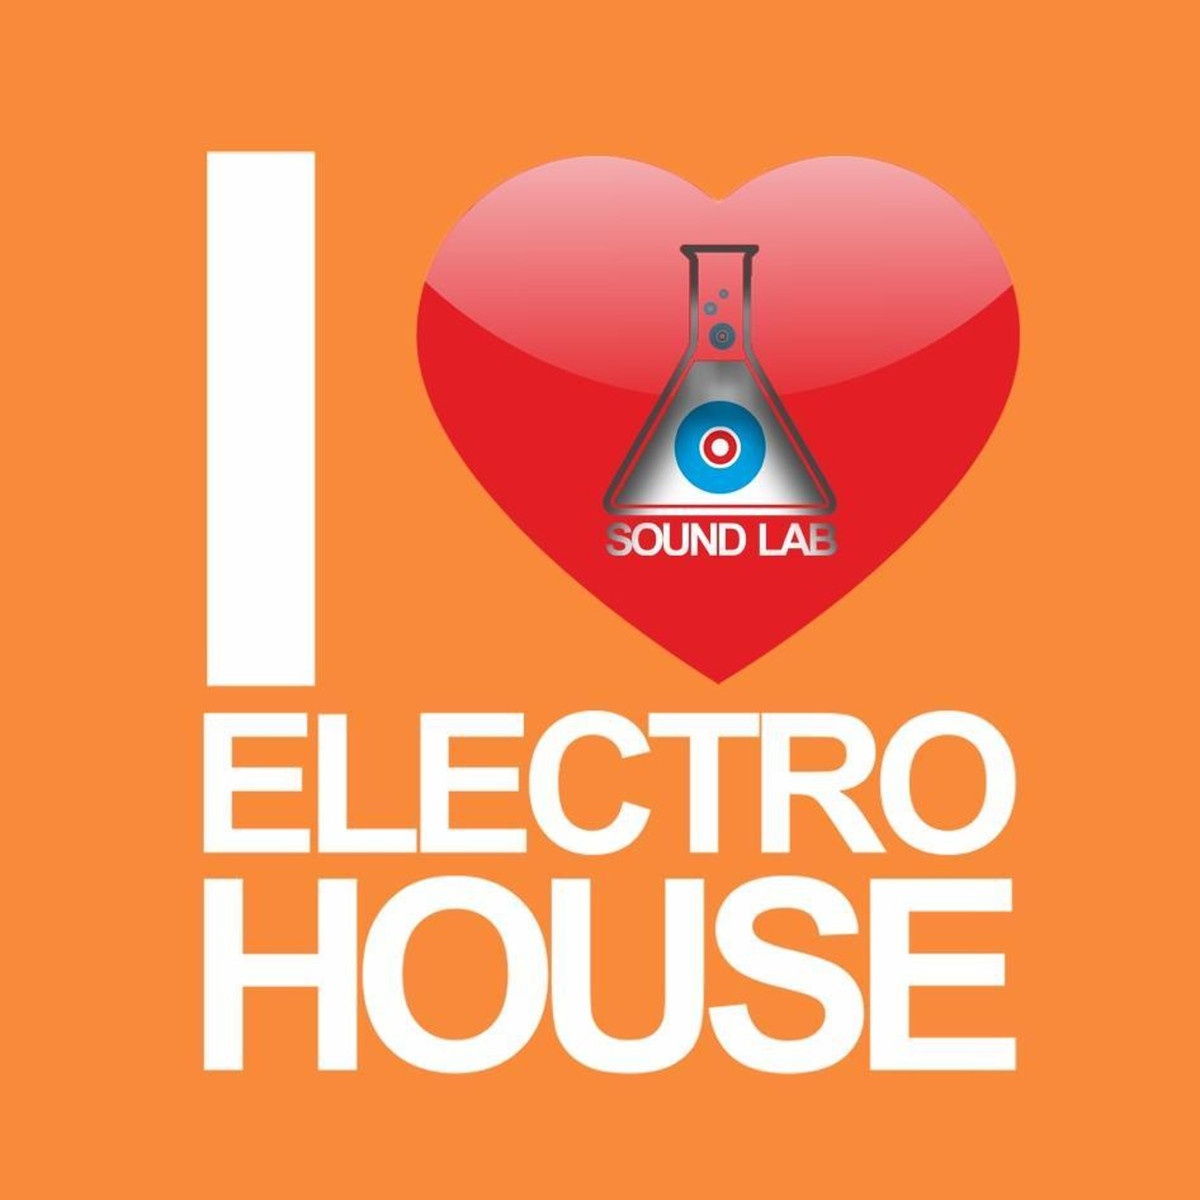 I love electro house